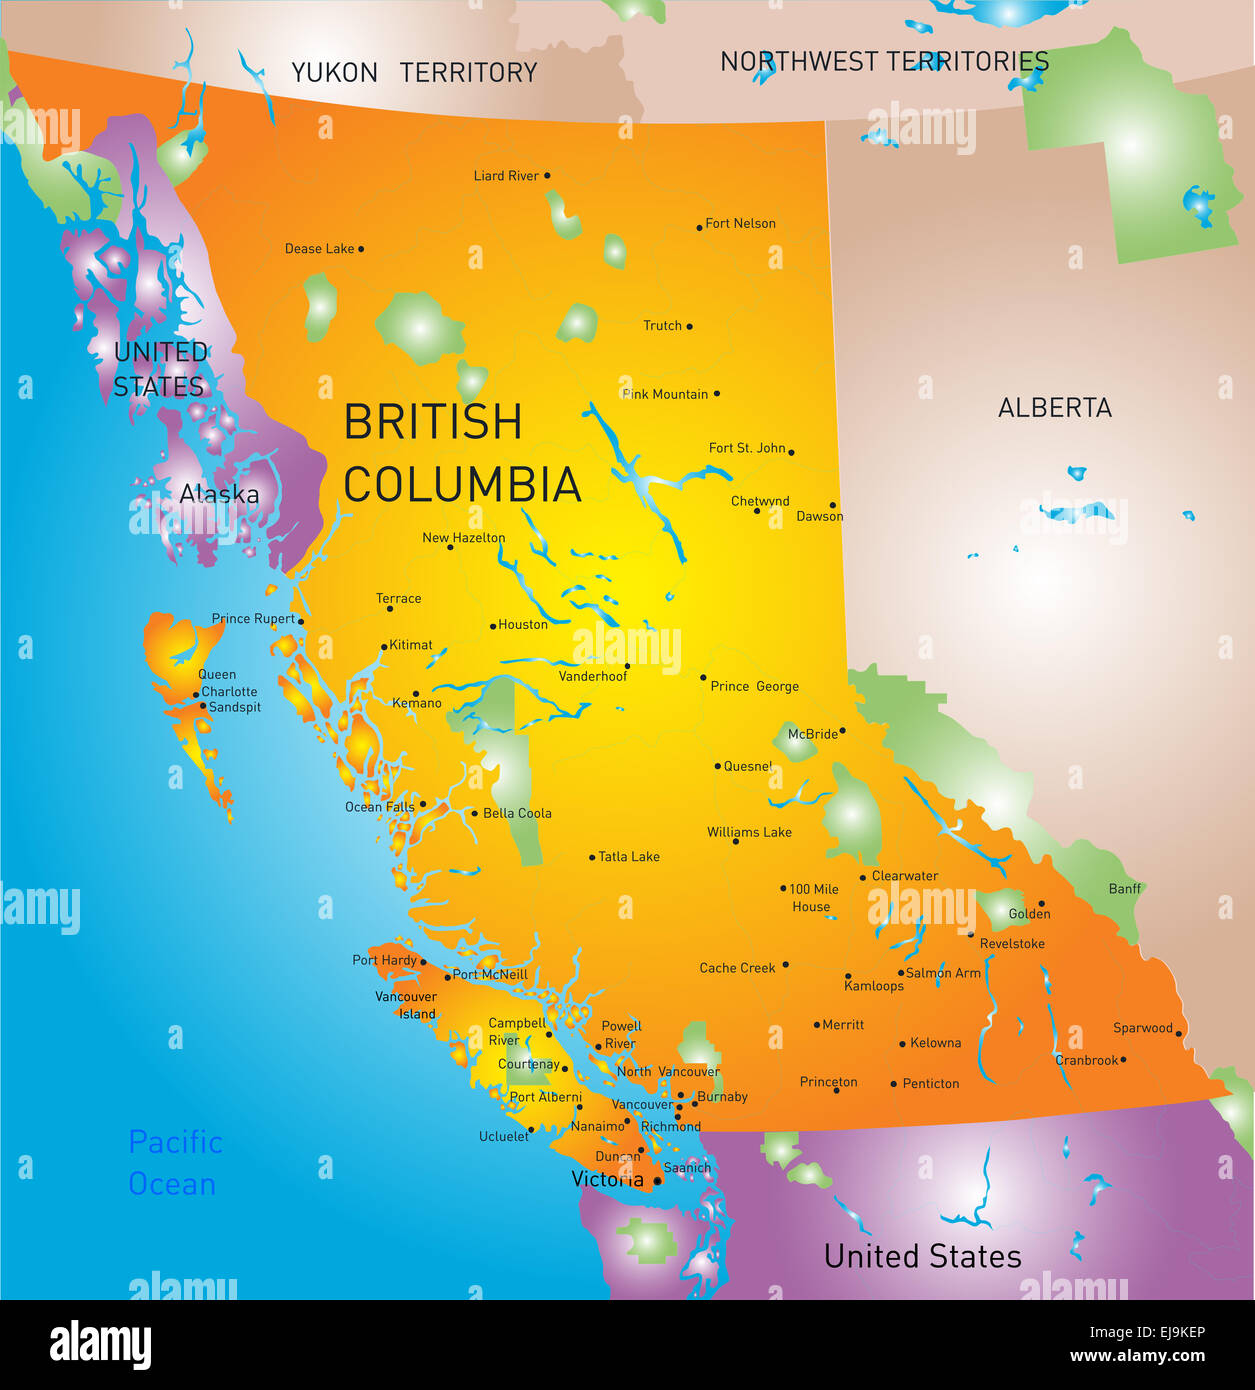 Montana british columbia border hi-res stock photography and images - Alamy